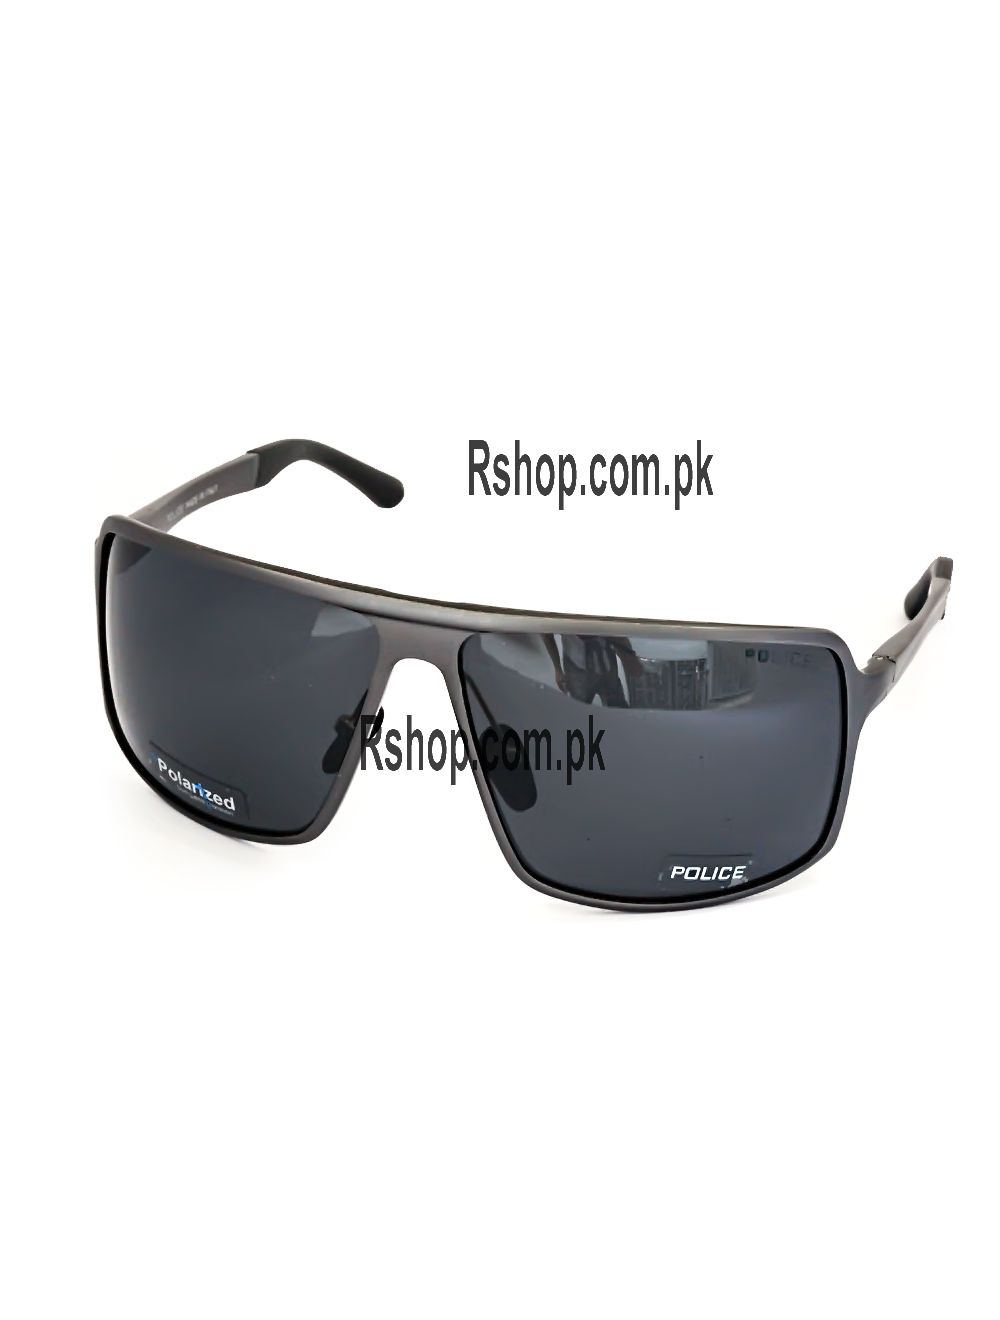 Hueso crecer cero Police Polarized Sunglasses,Police Sunglasses - Buy Online‎, Police prices  in pakistan